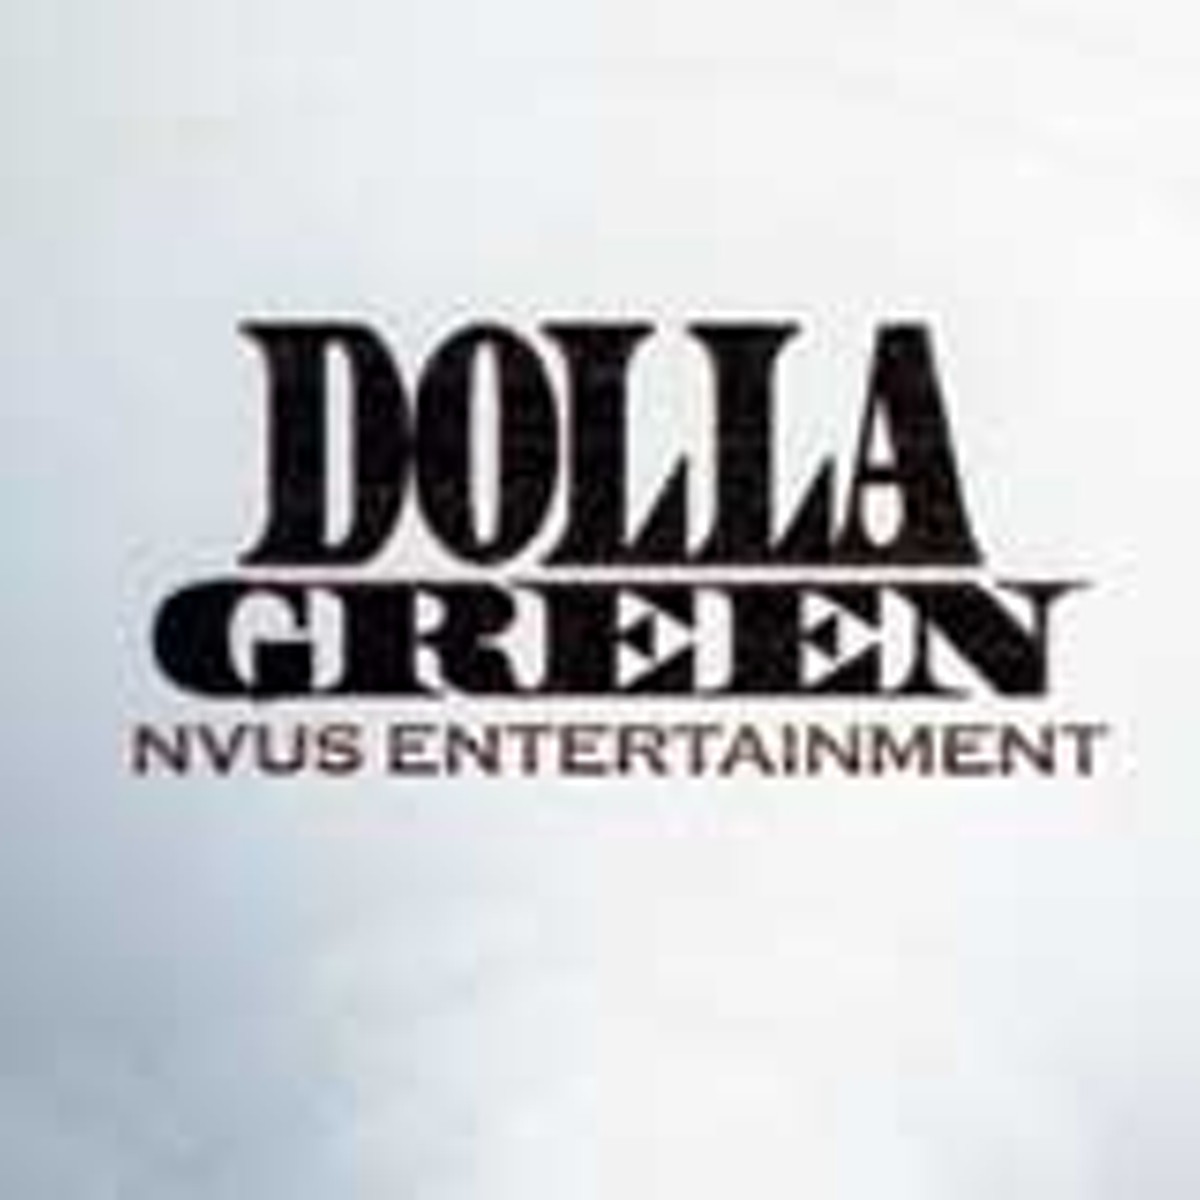 Dolla Green